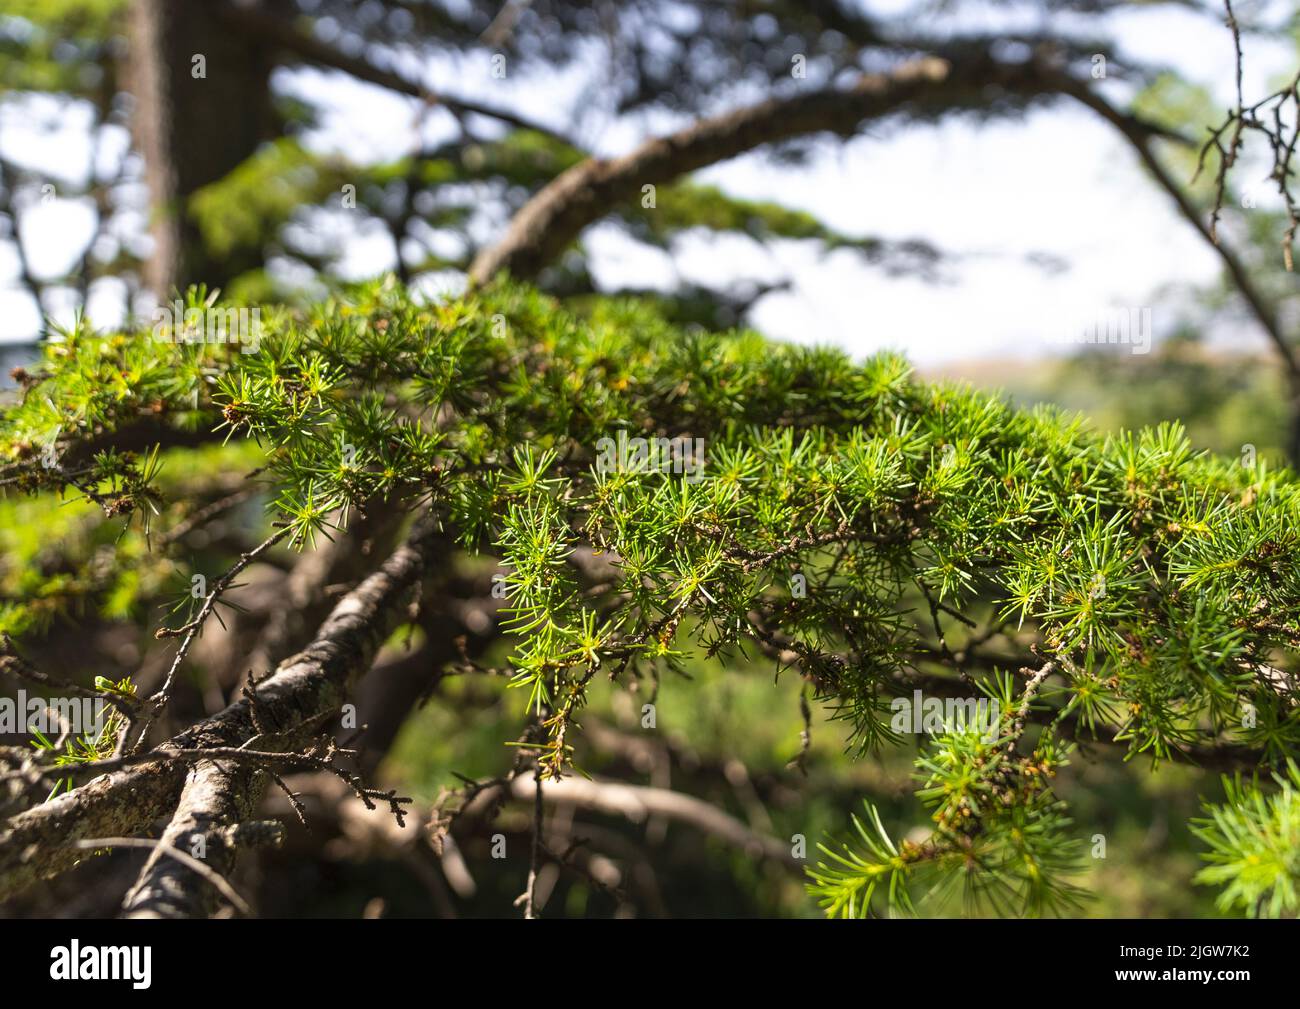 Tannourine Cedar Forest Nature Reserve, Governorate of North Lebanon, Tannourine, Lebanon Stock Photo